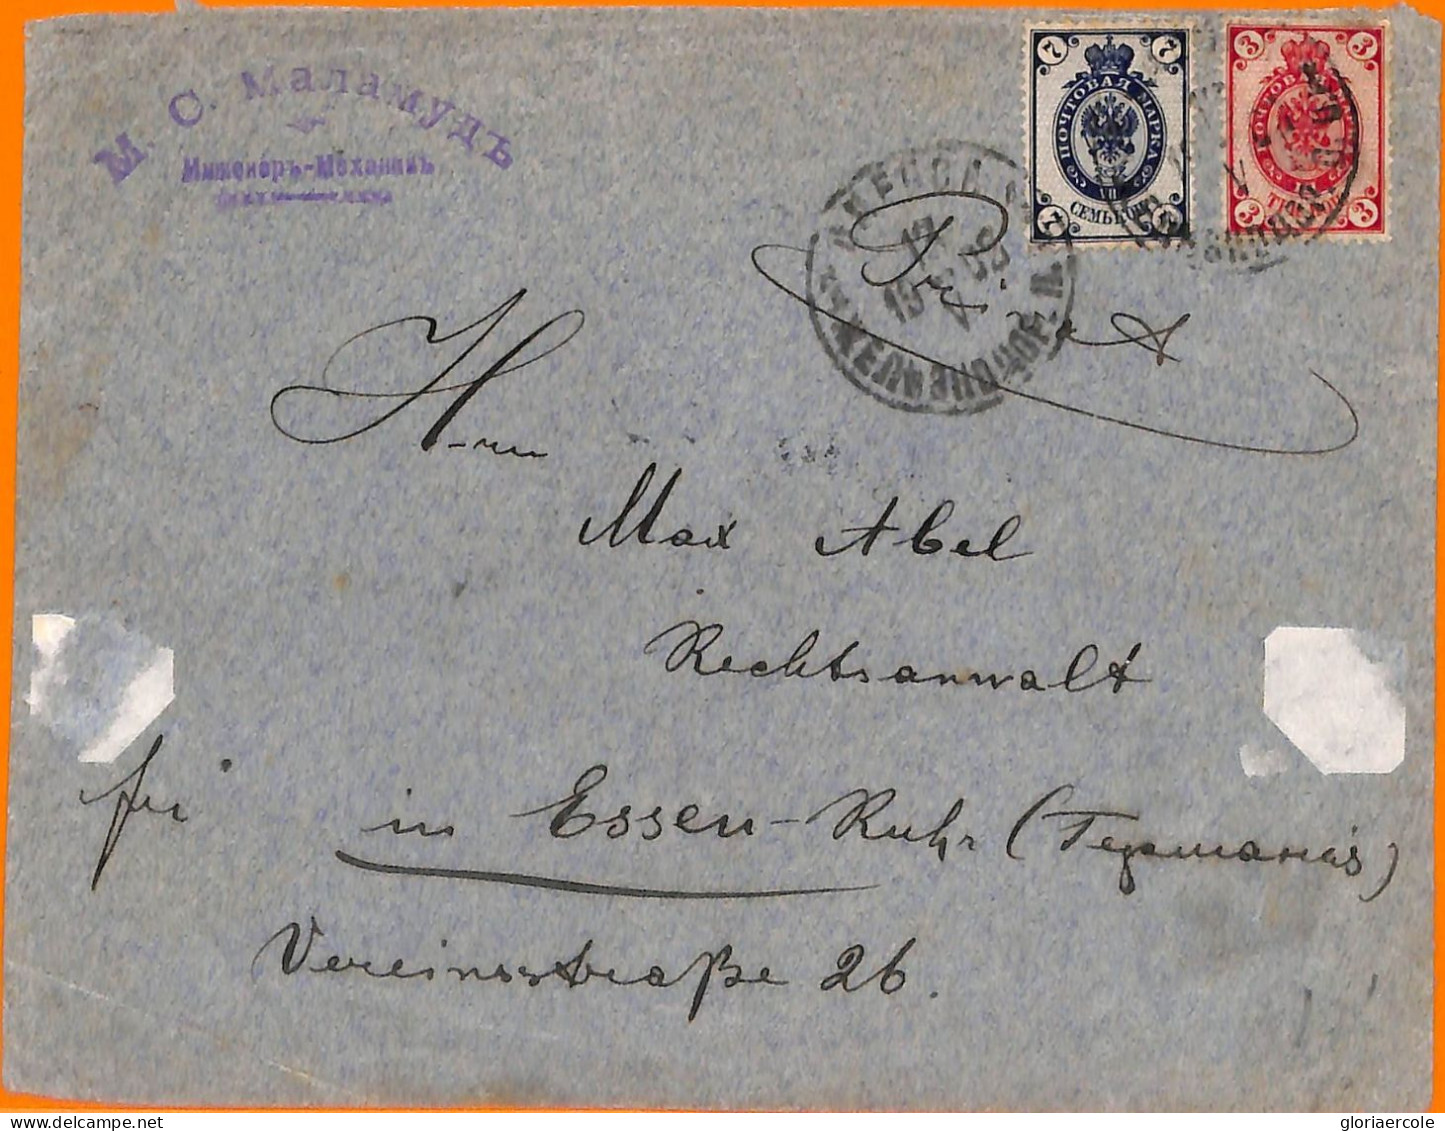 99527 - RUSSIA - Postal History -   COVER To GERMANY     1902 - Briefe U. Dokumente